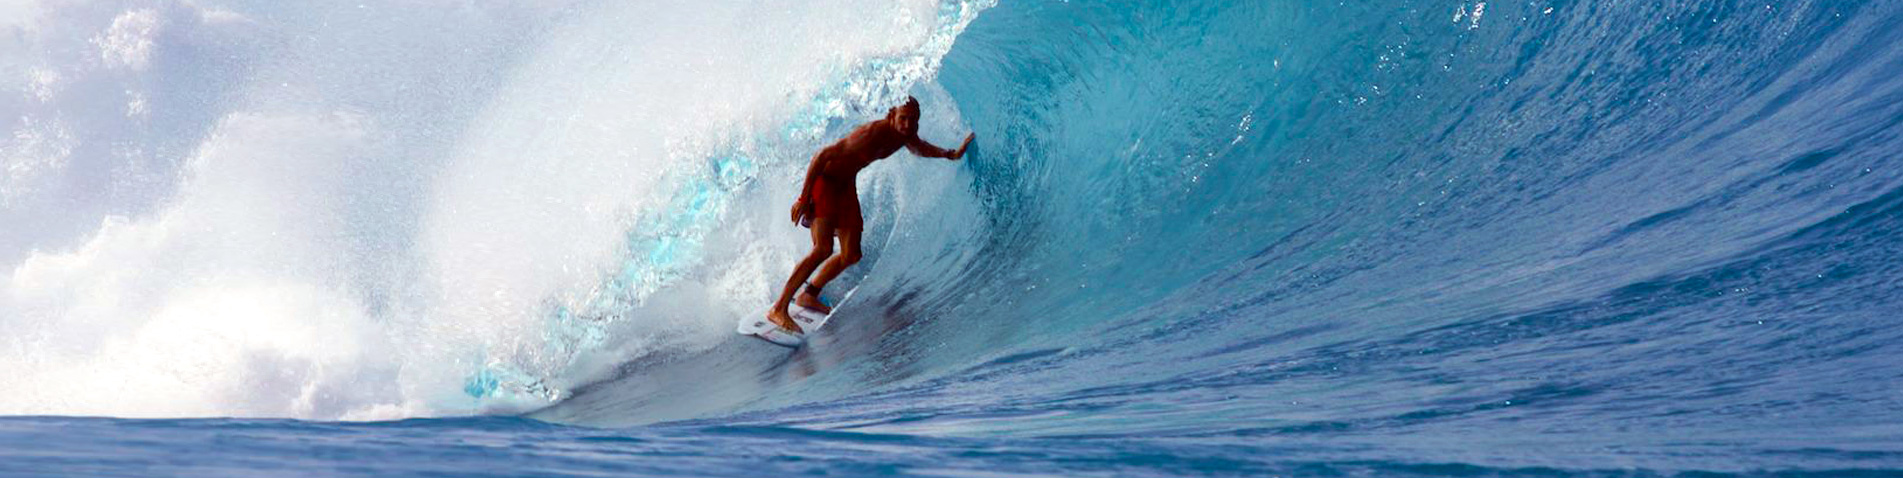 Maldives Luxury Surf Guide Header Image